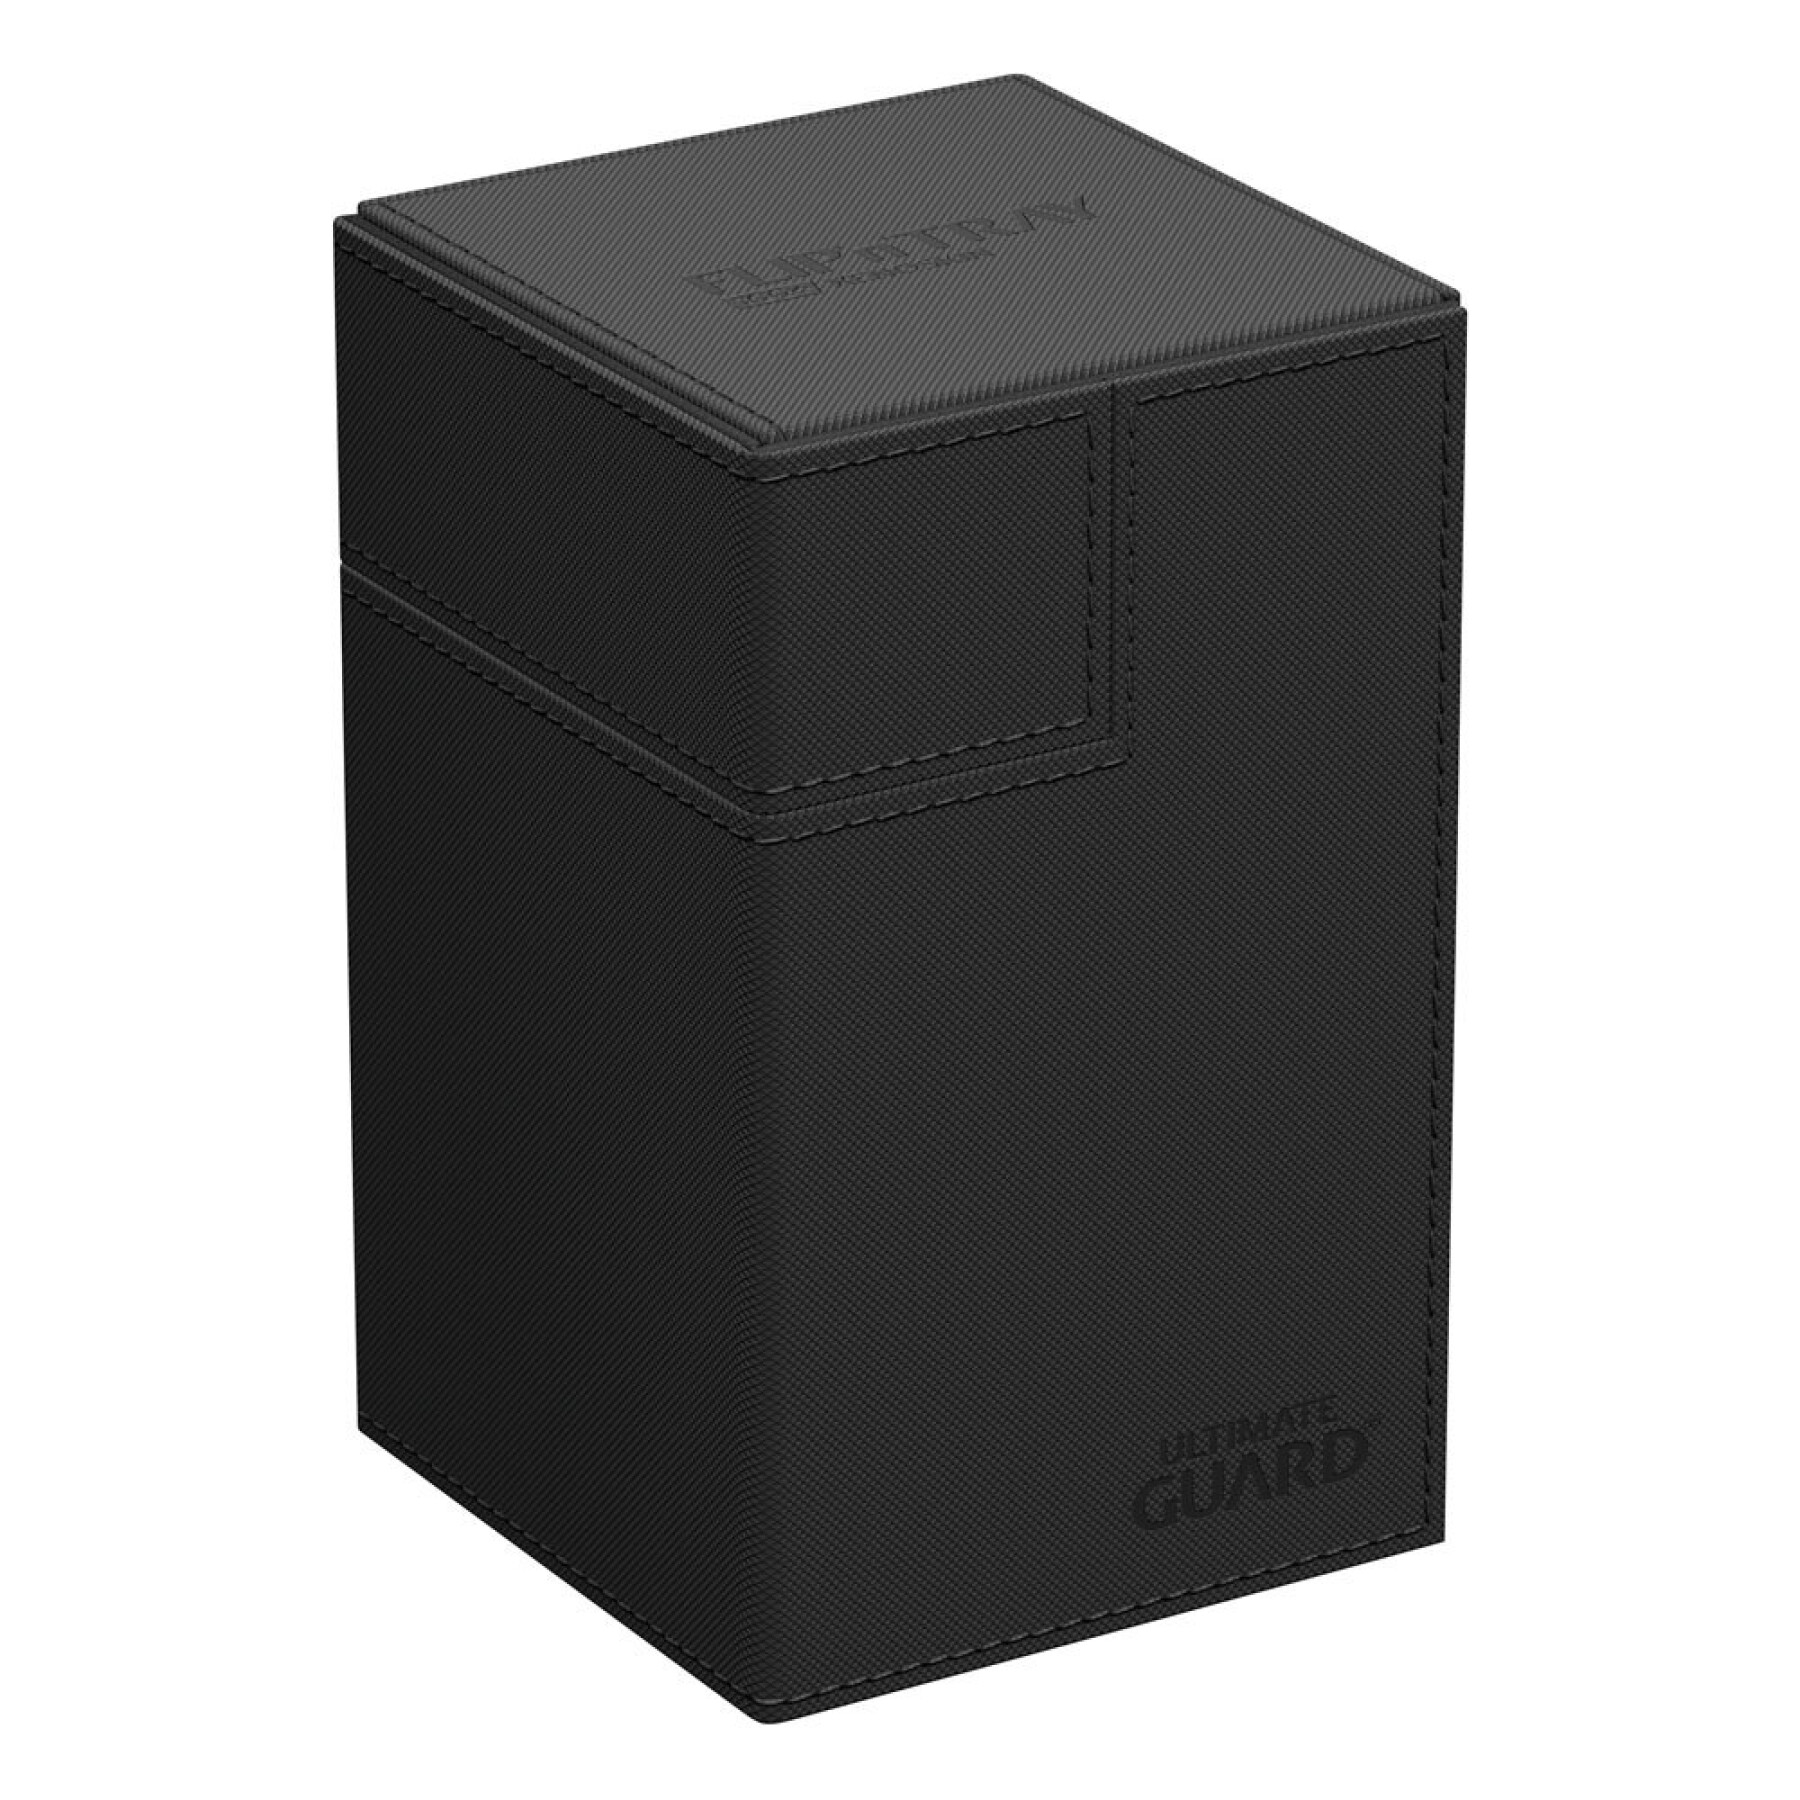 Aufbewahrungsbox Ultimate Guard Flip`N`Tray 100+ Xenoskin